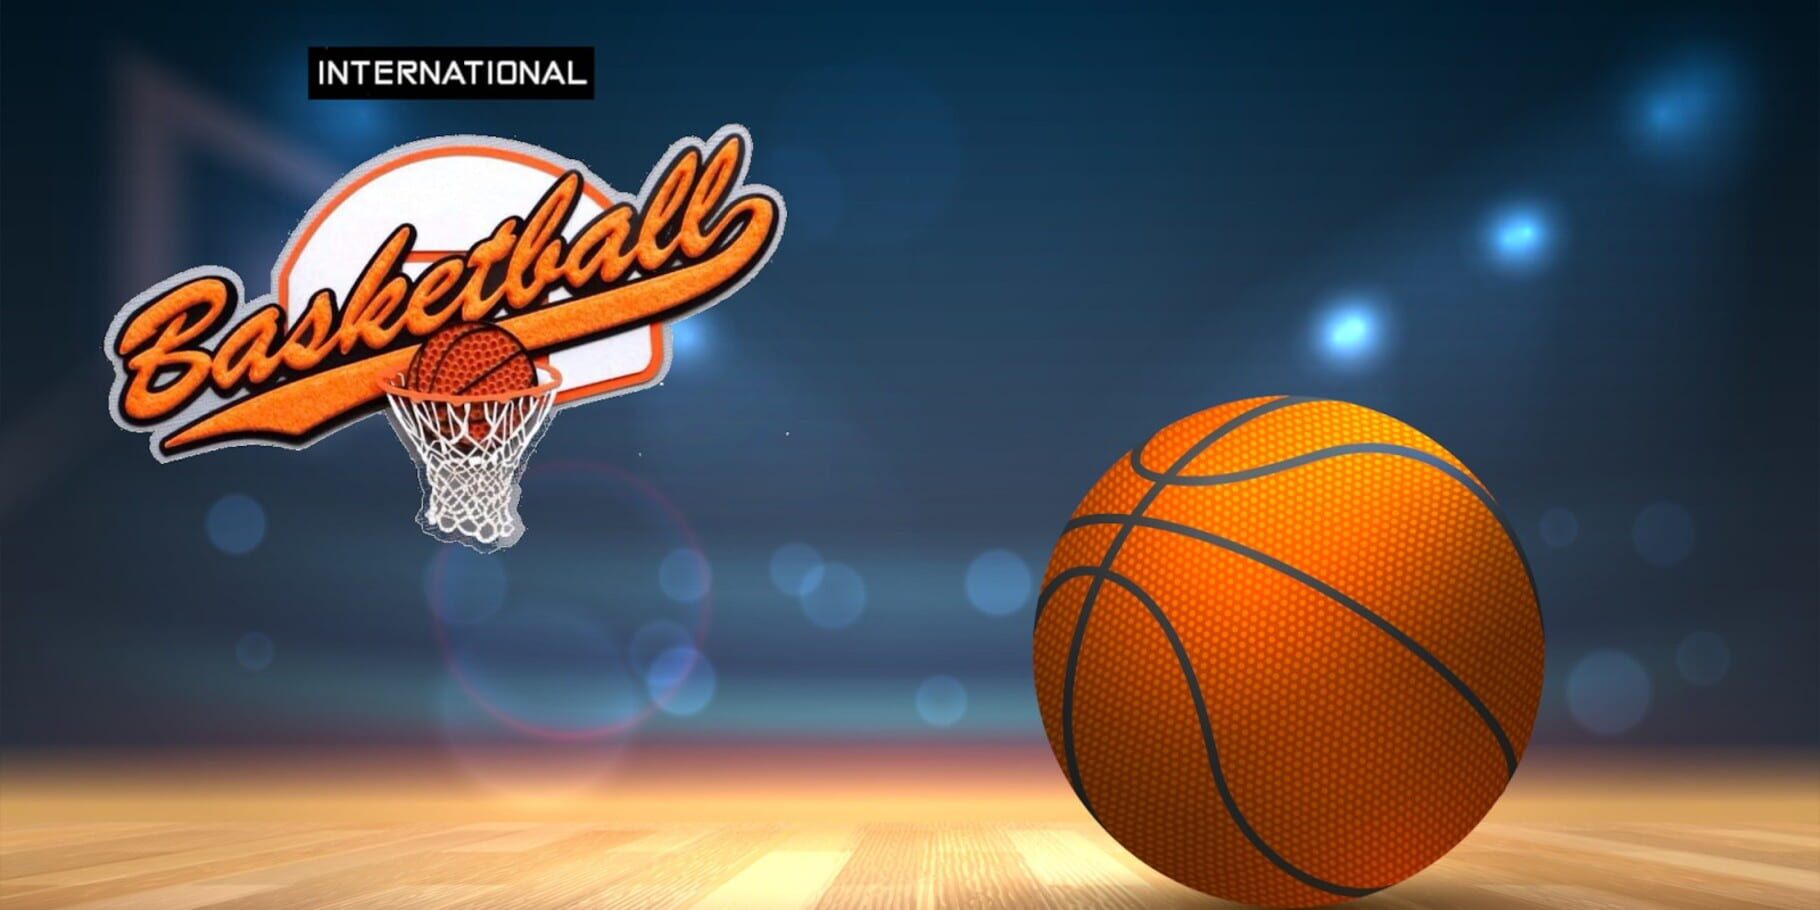 International Basketball artwork